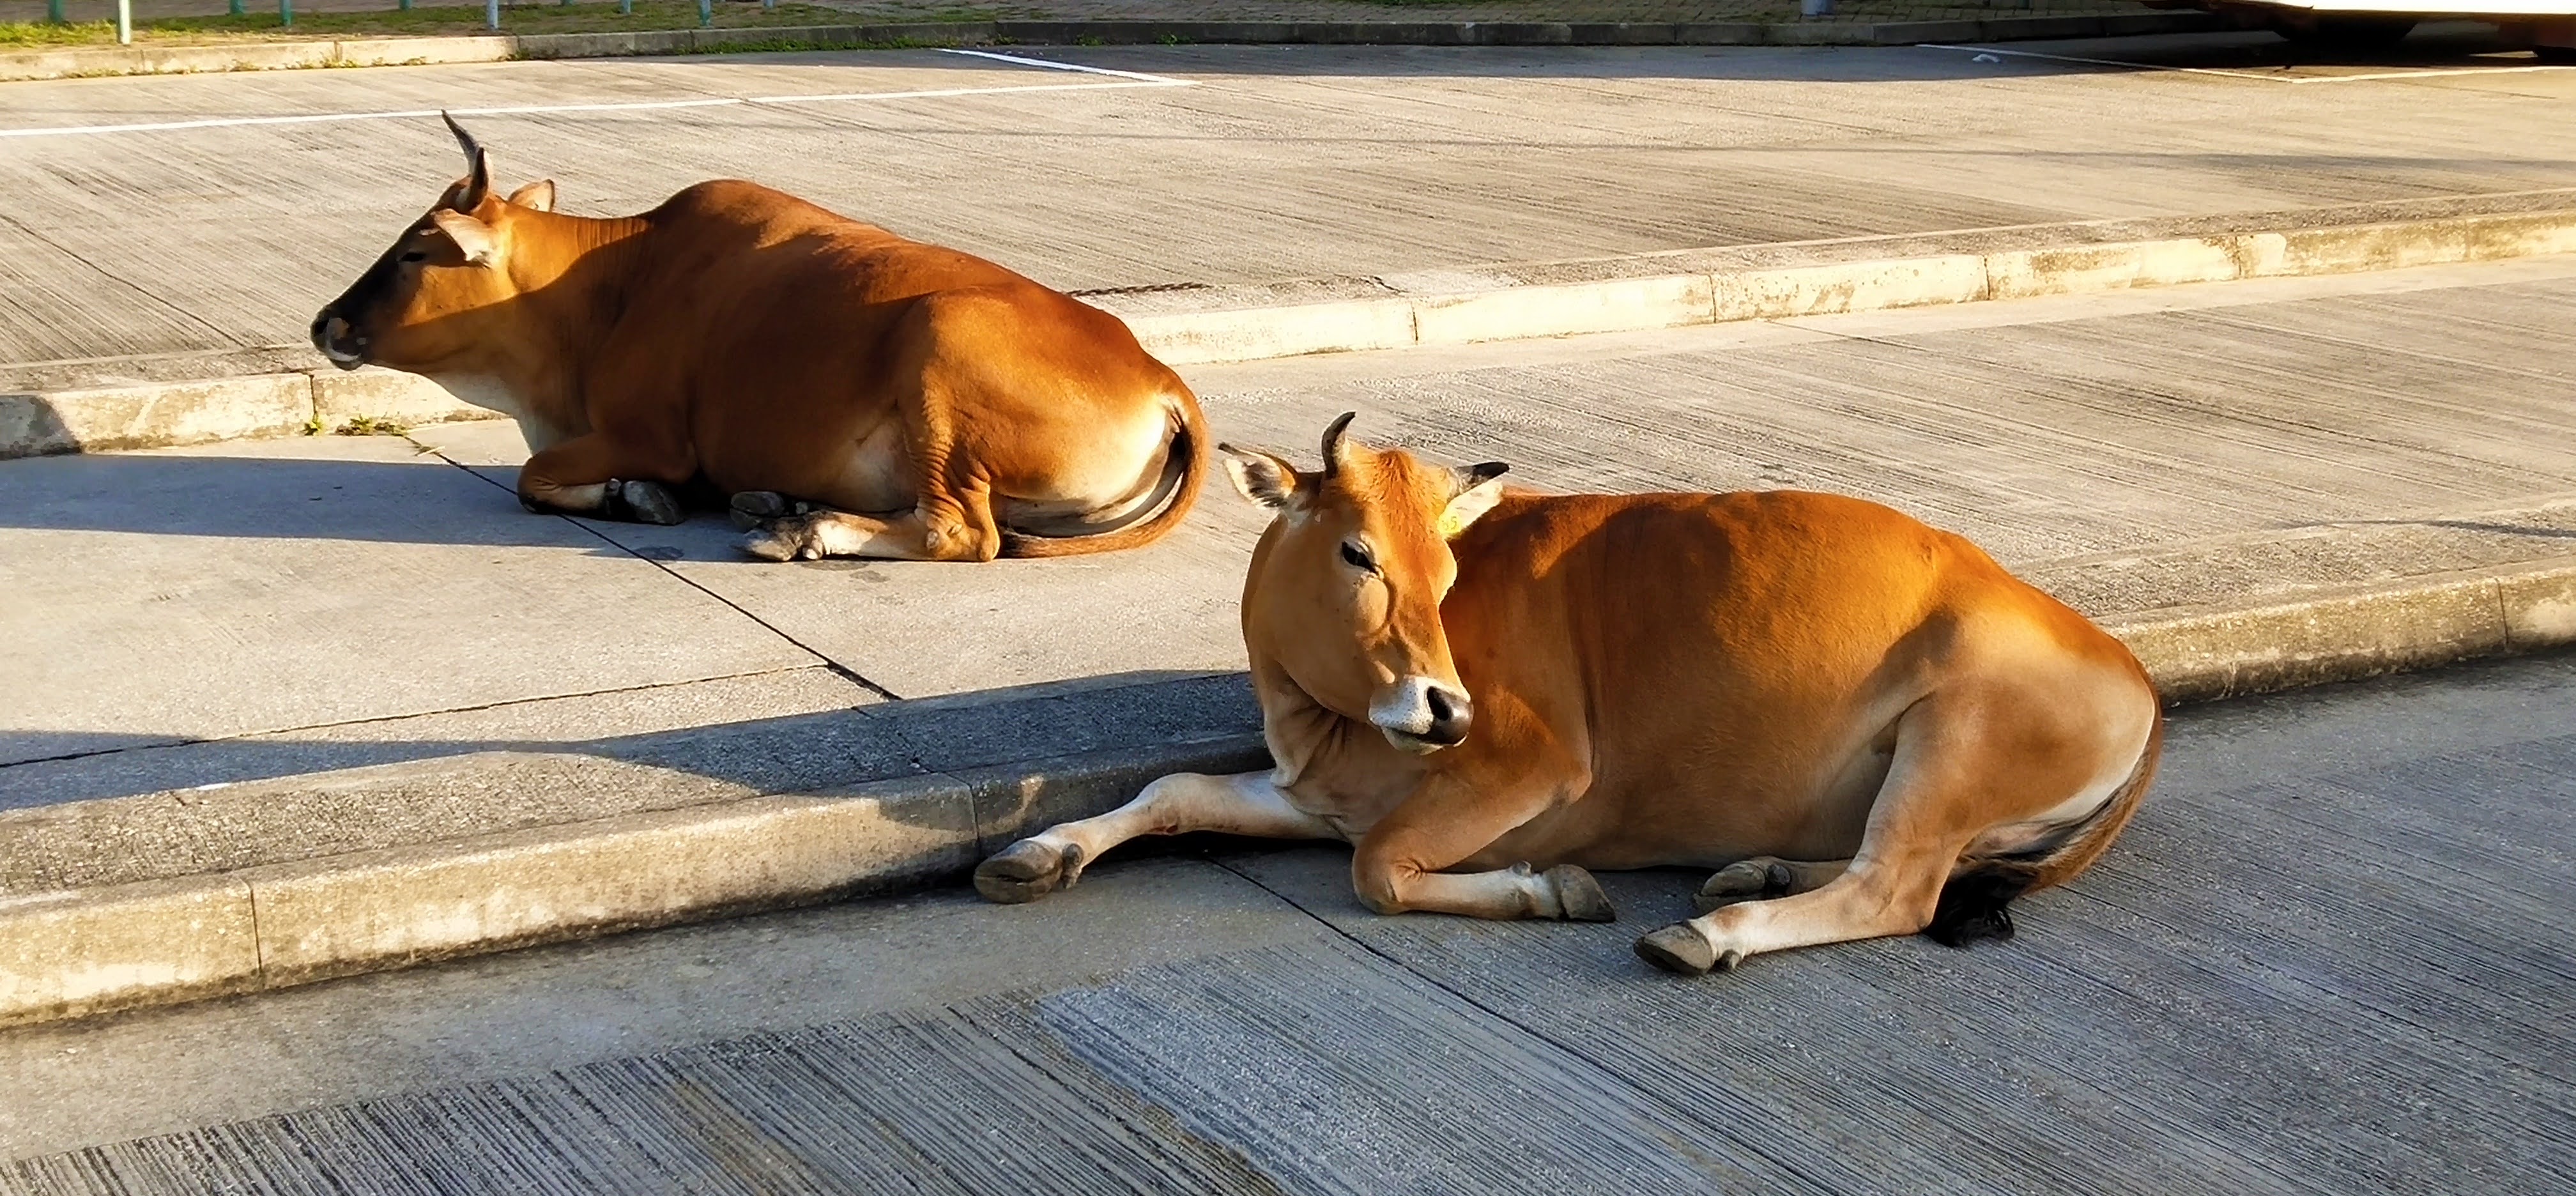 Cows are enjoying sunbathing